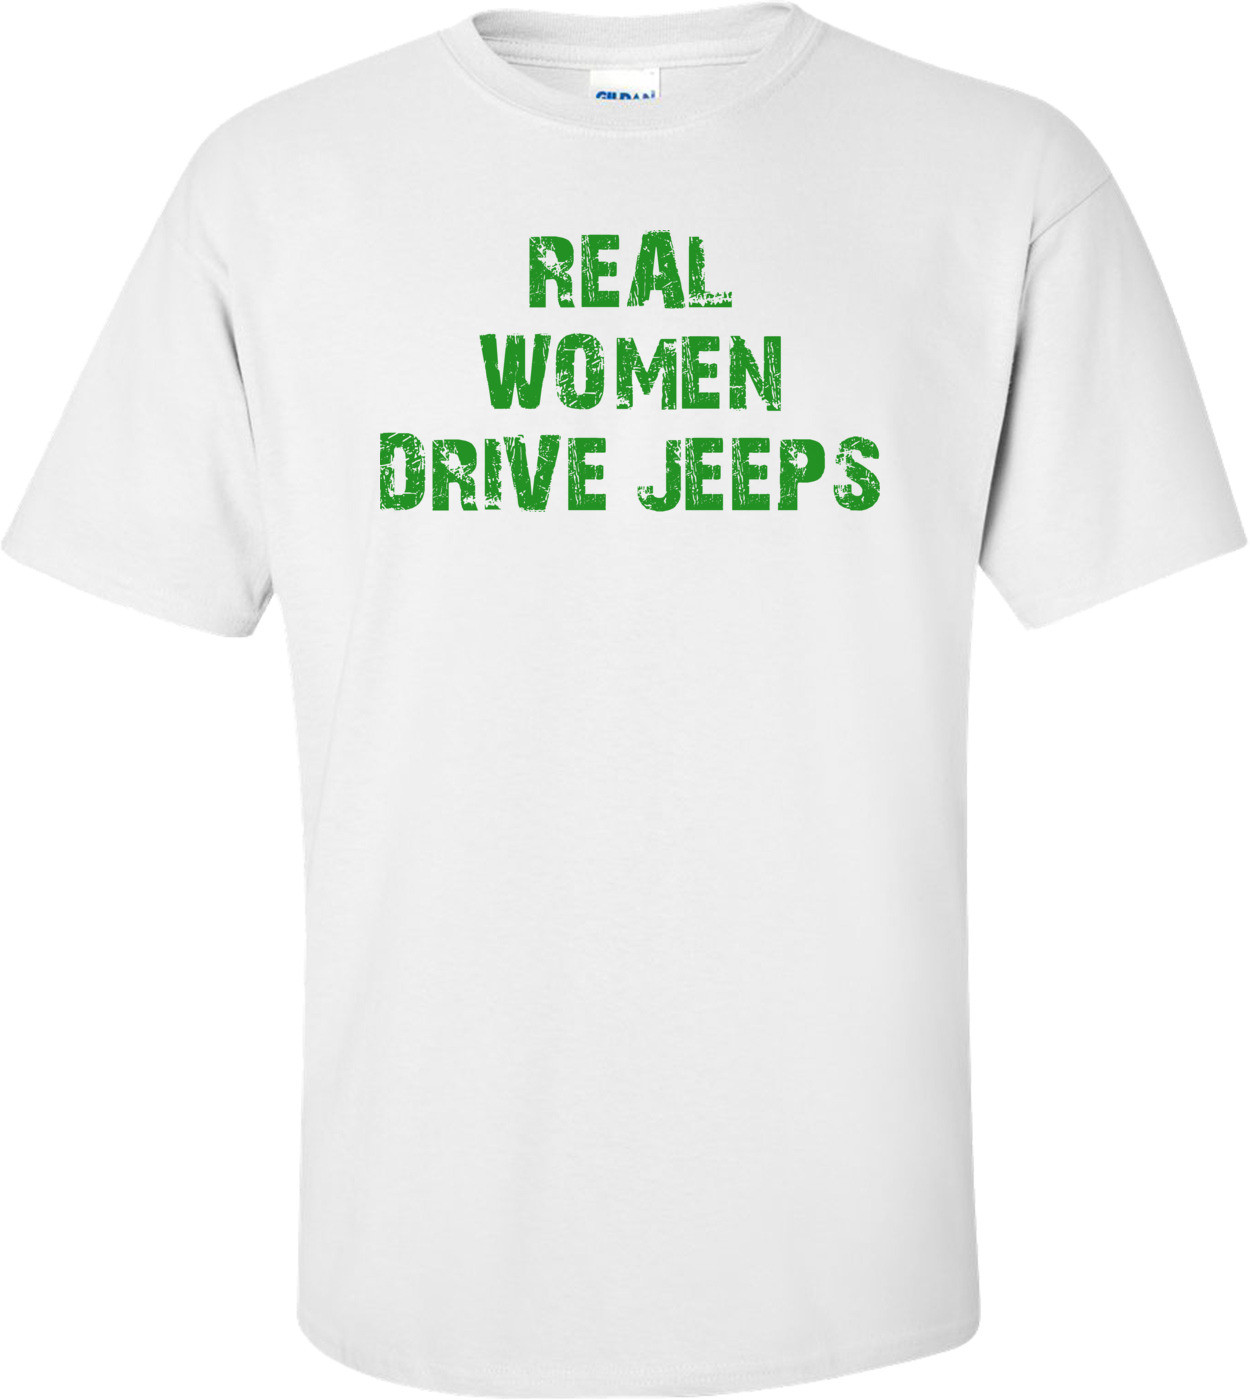 Real Women Drive Jeeps Shirt